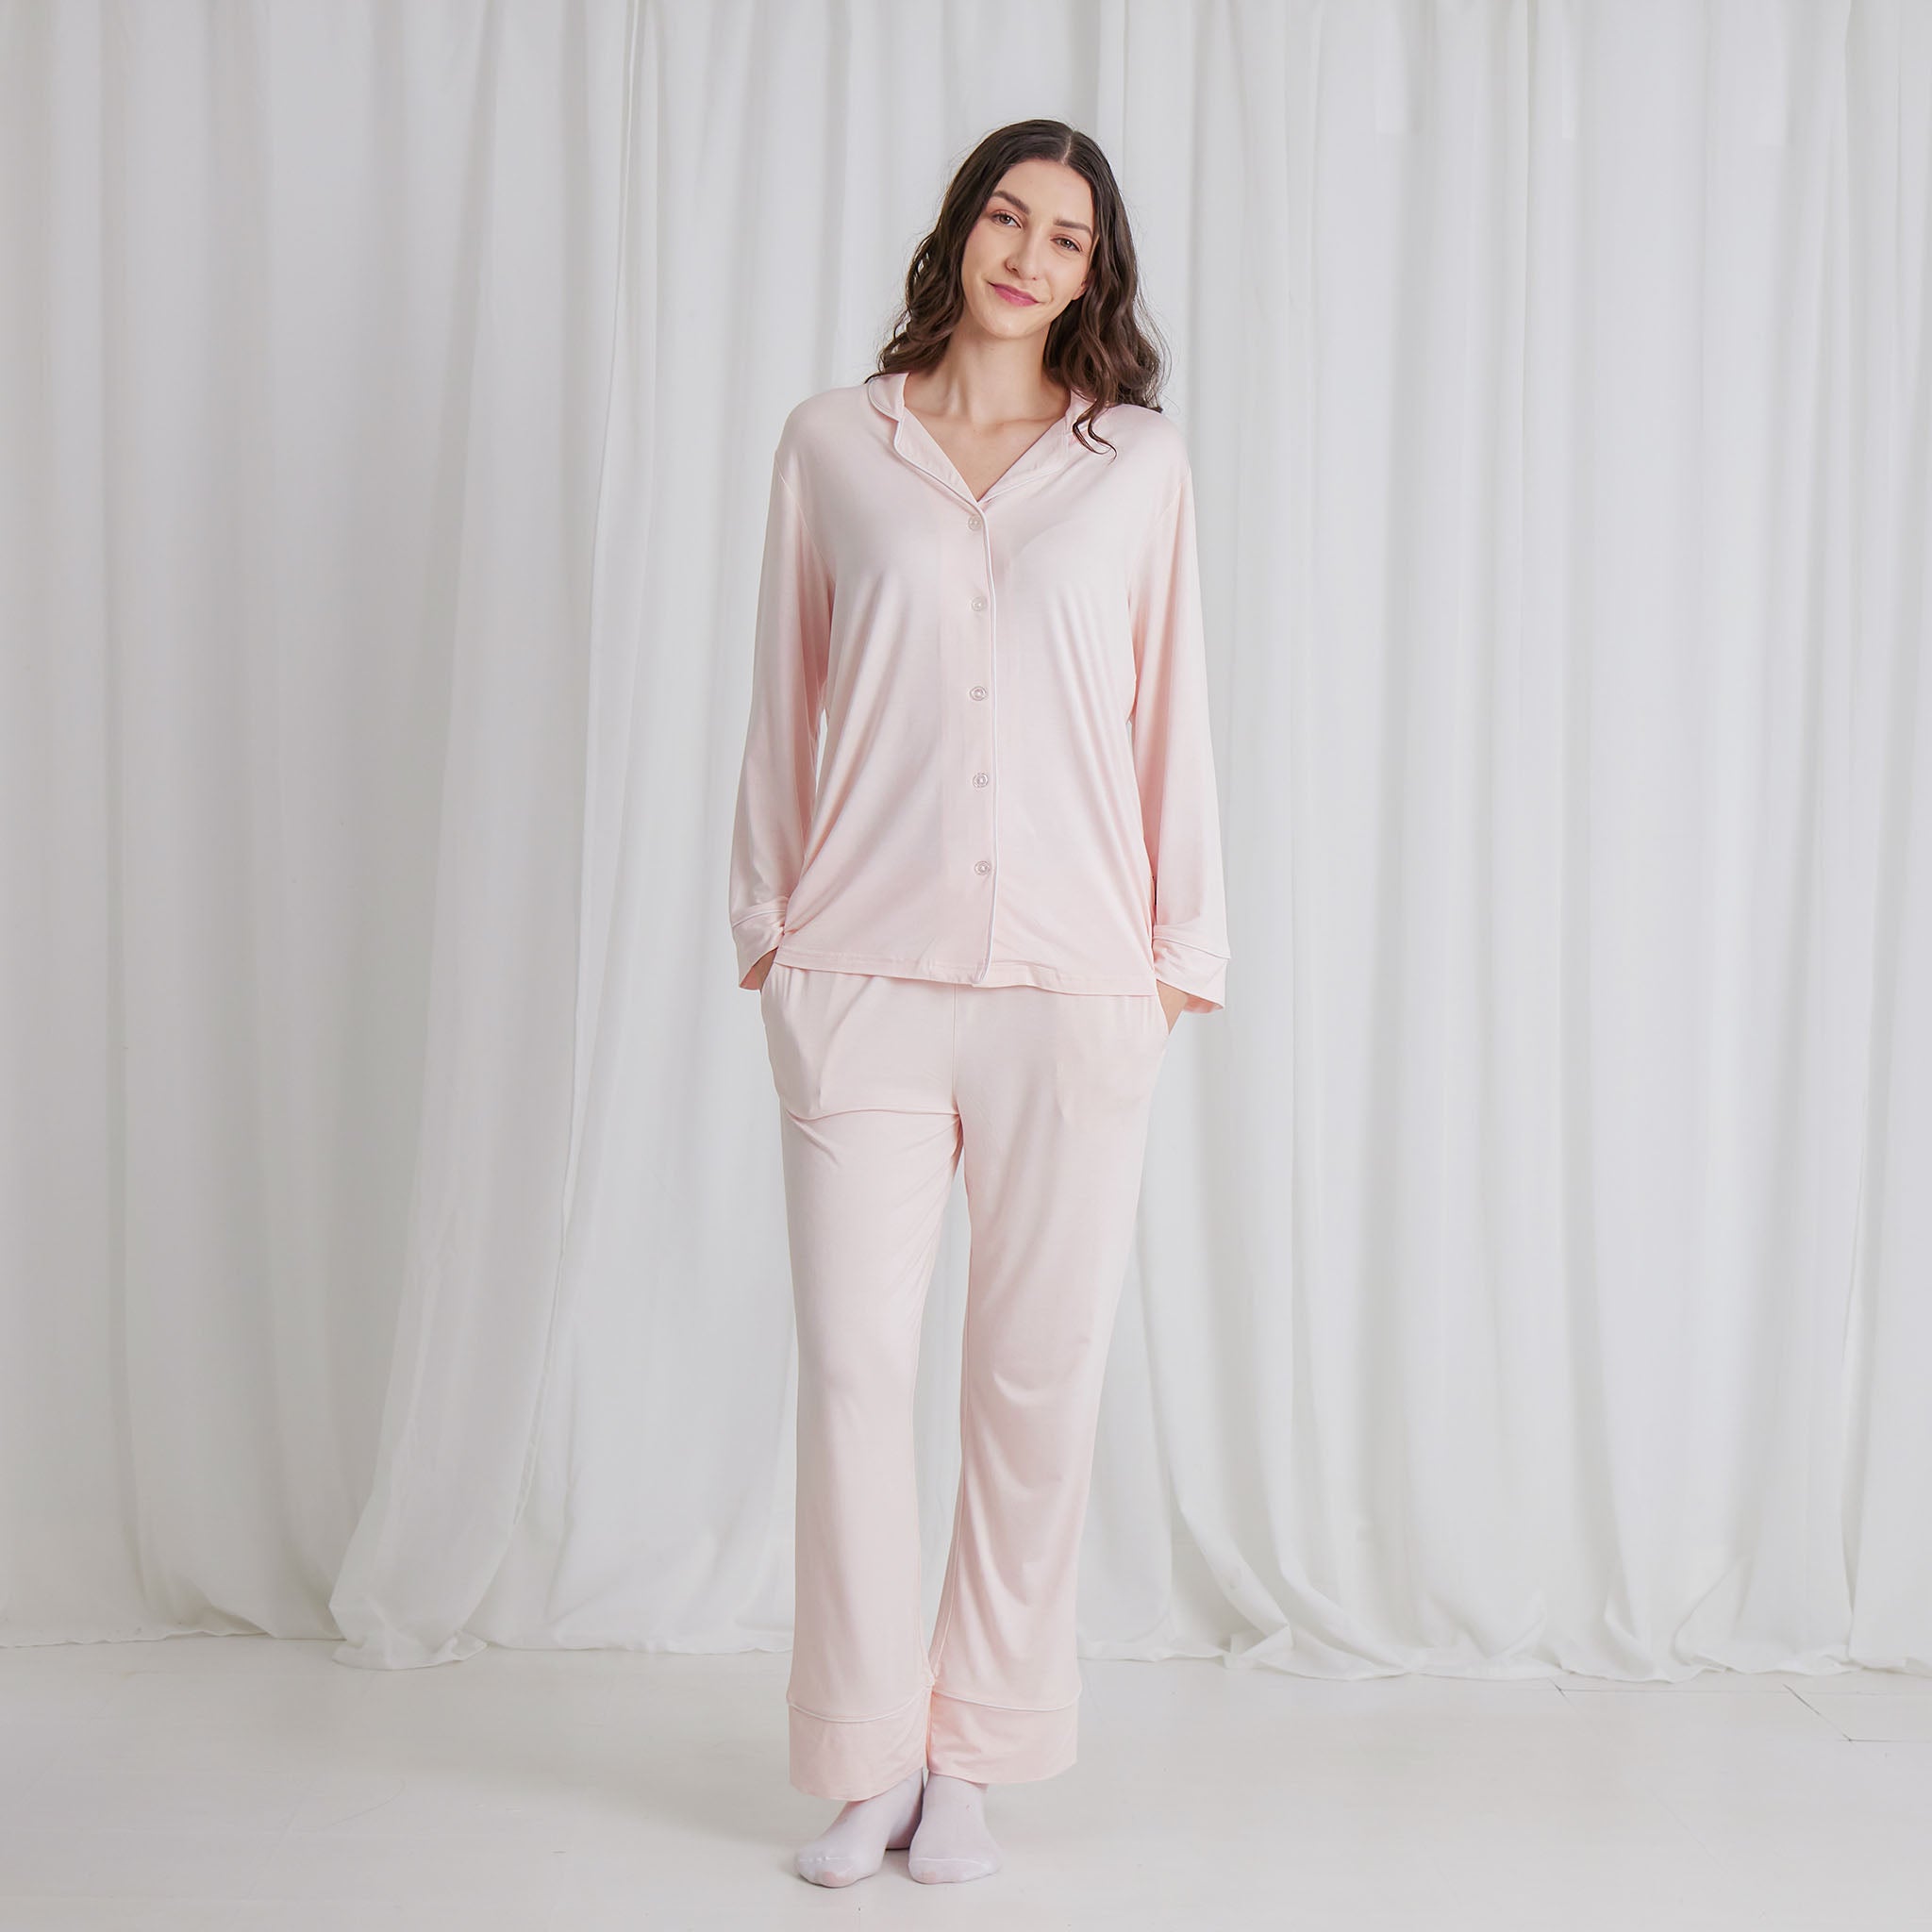 Bamboo Chemo Port Tank Top - China Women's Loungewear and Women's Pajamas  Set price